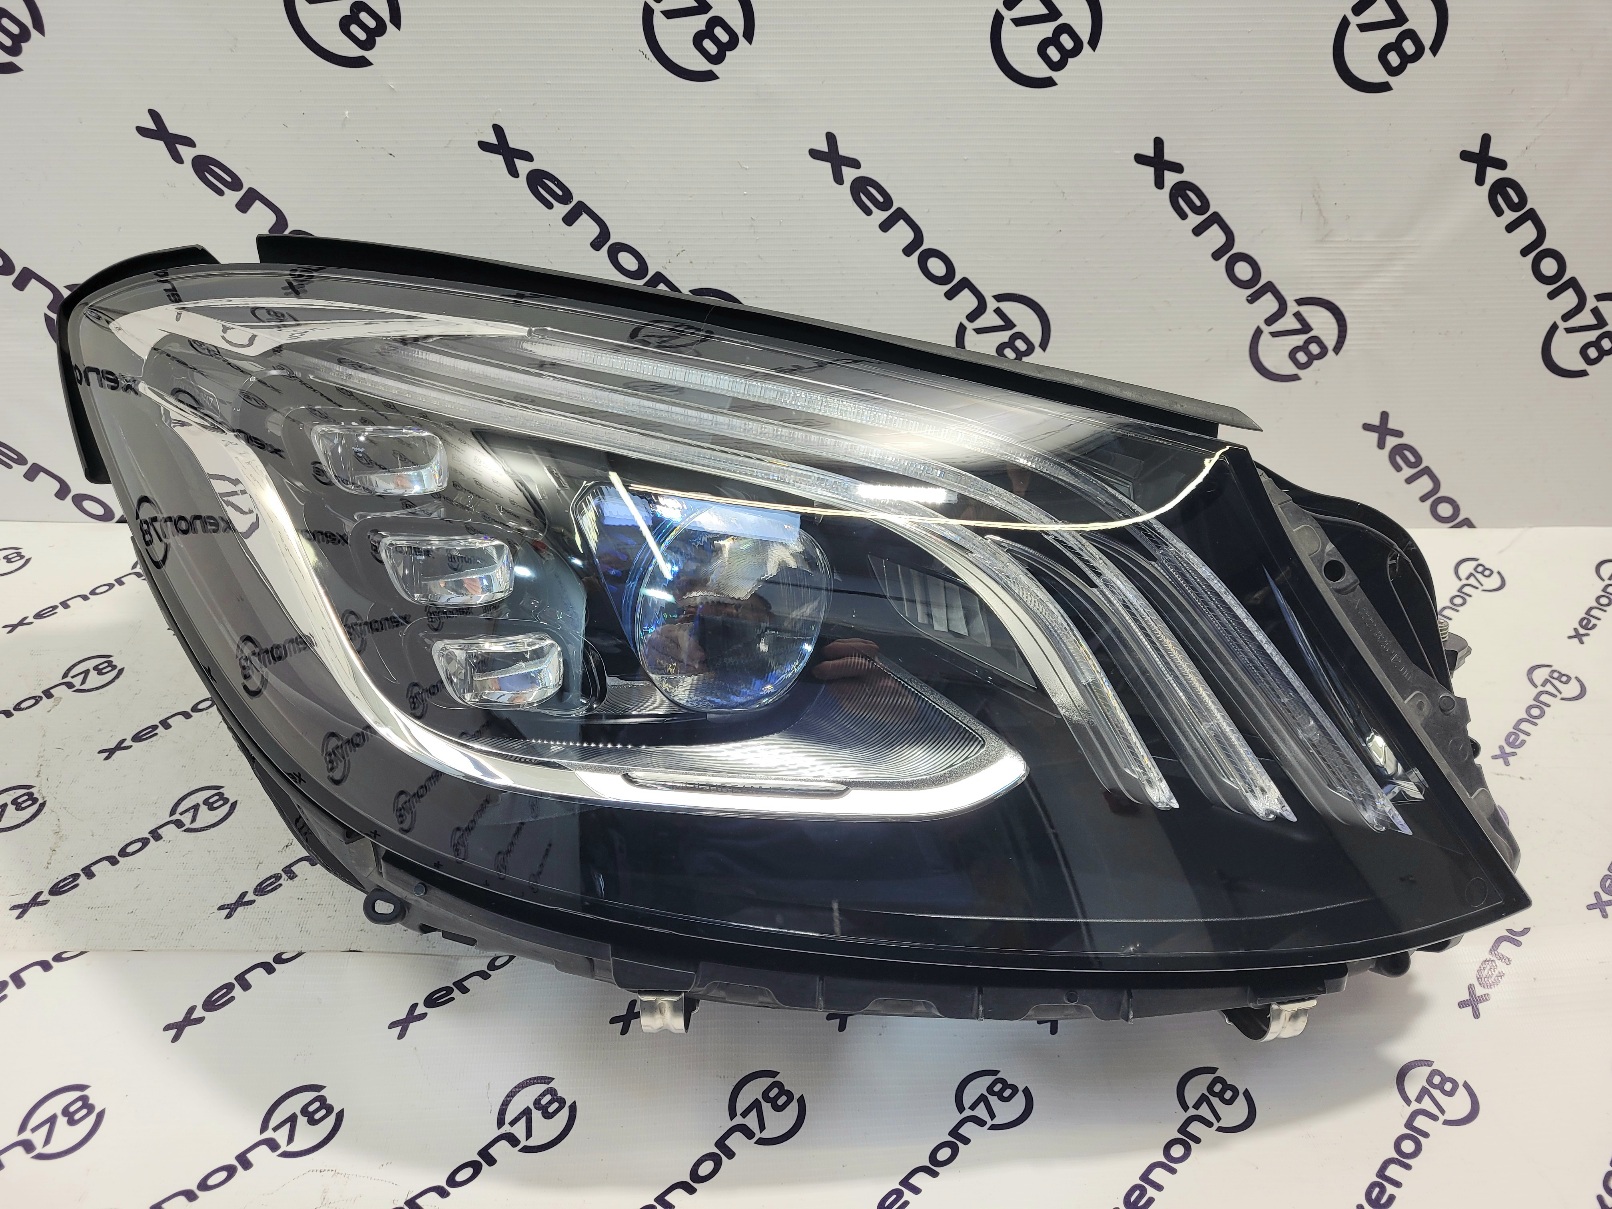 Фара Mercedes-Benz S-class(W222) правая A2229062005 MULTIBEAM LED бу 17г. Новое стекло.П1-12-6